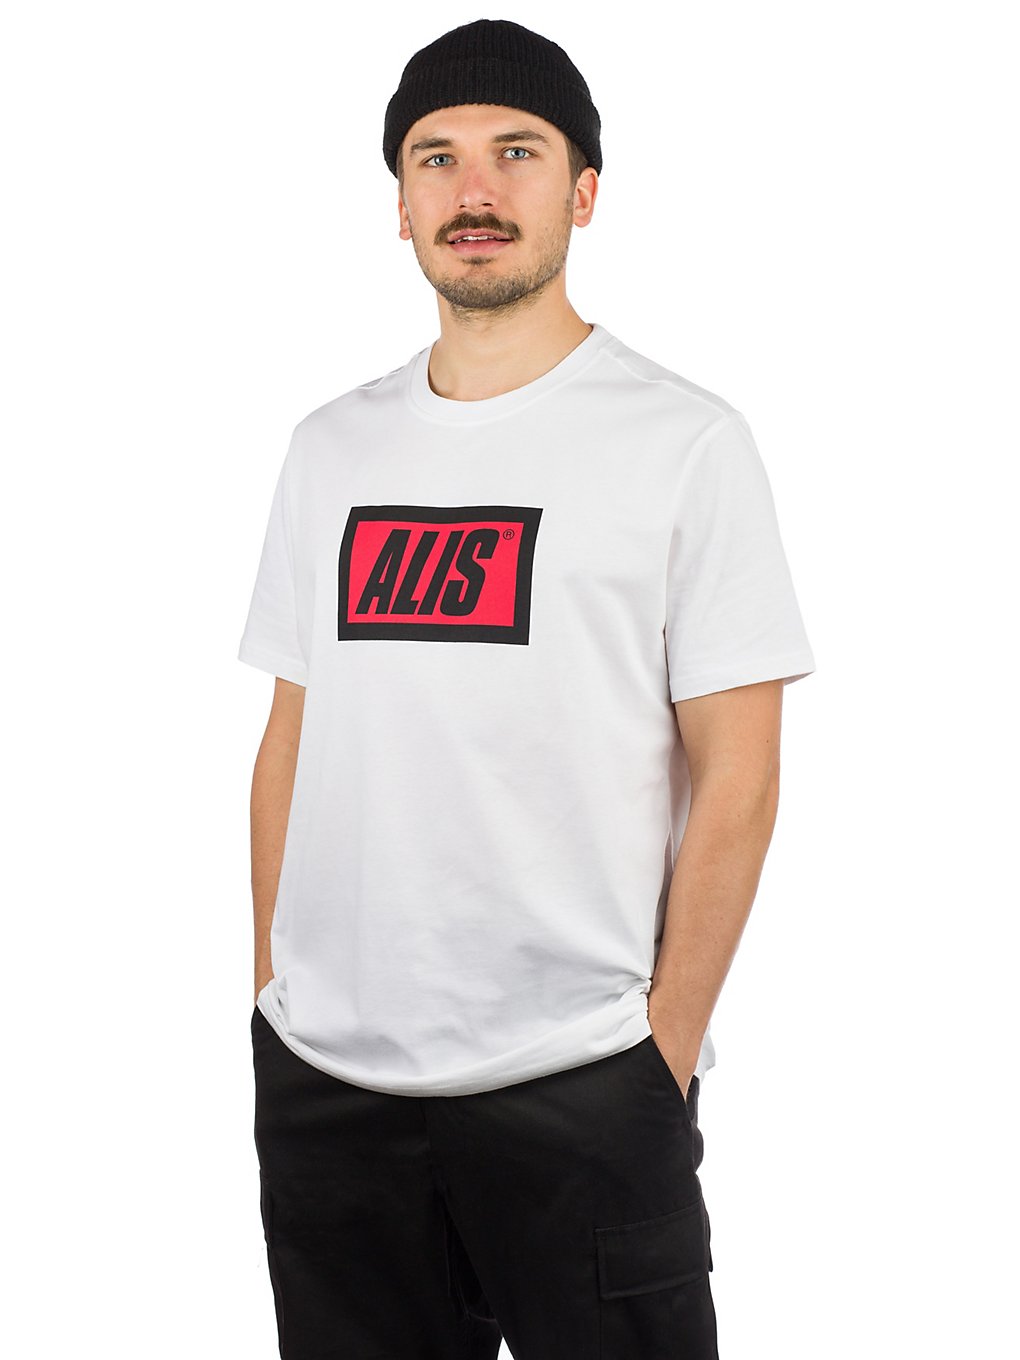 ALIS Classic T-Shirt white